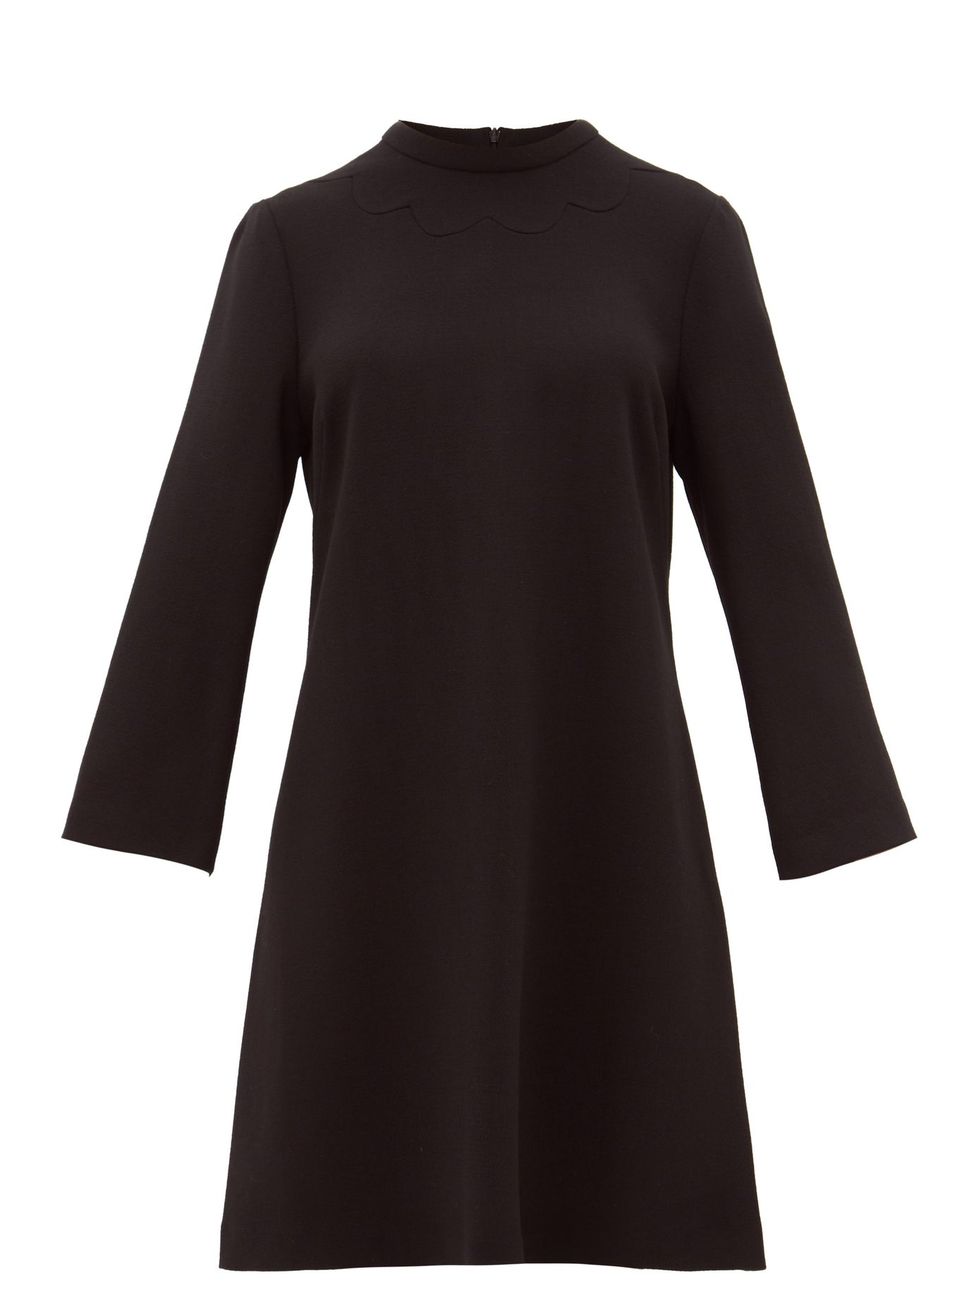 Clothing, Sleeve, Black, Dress, Outerwear, A-line, Little black dress, Neck, Coat, T-shirt, 